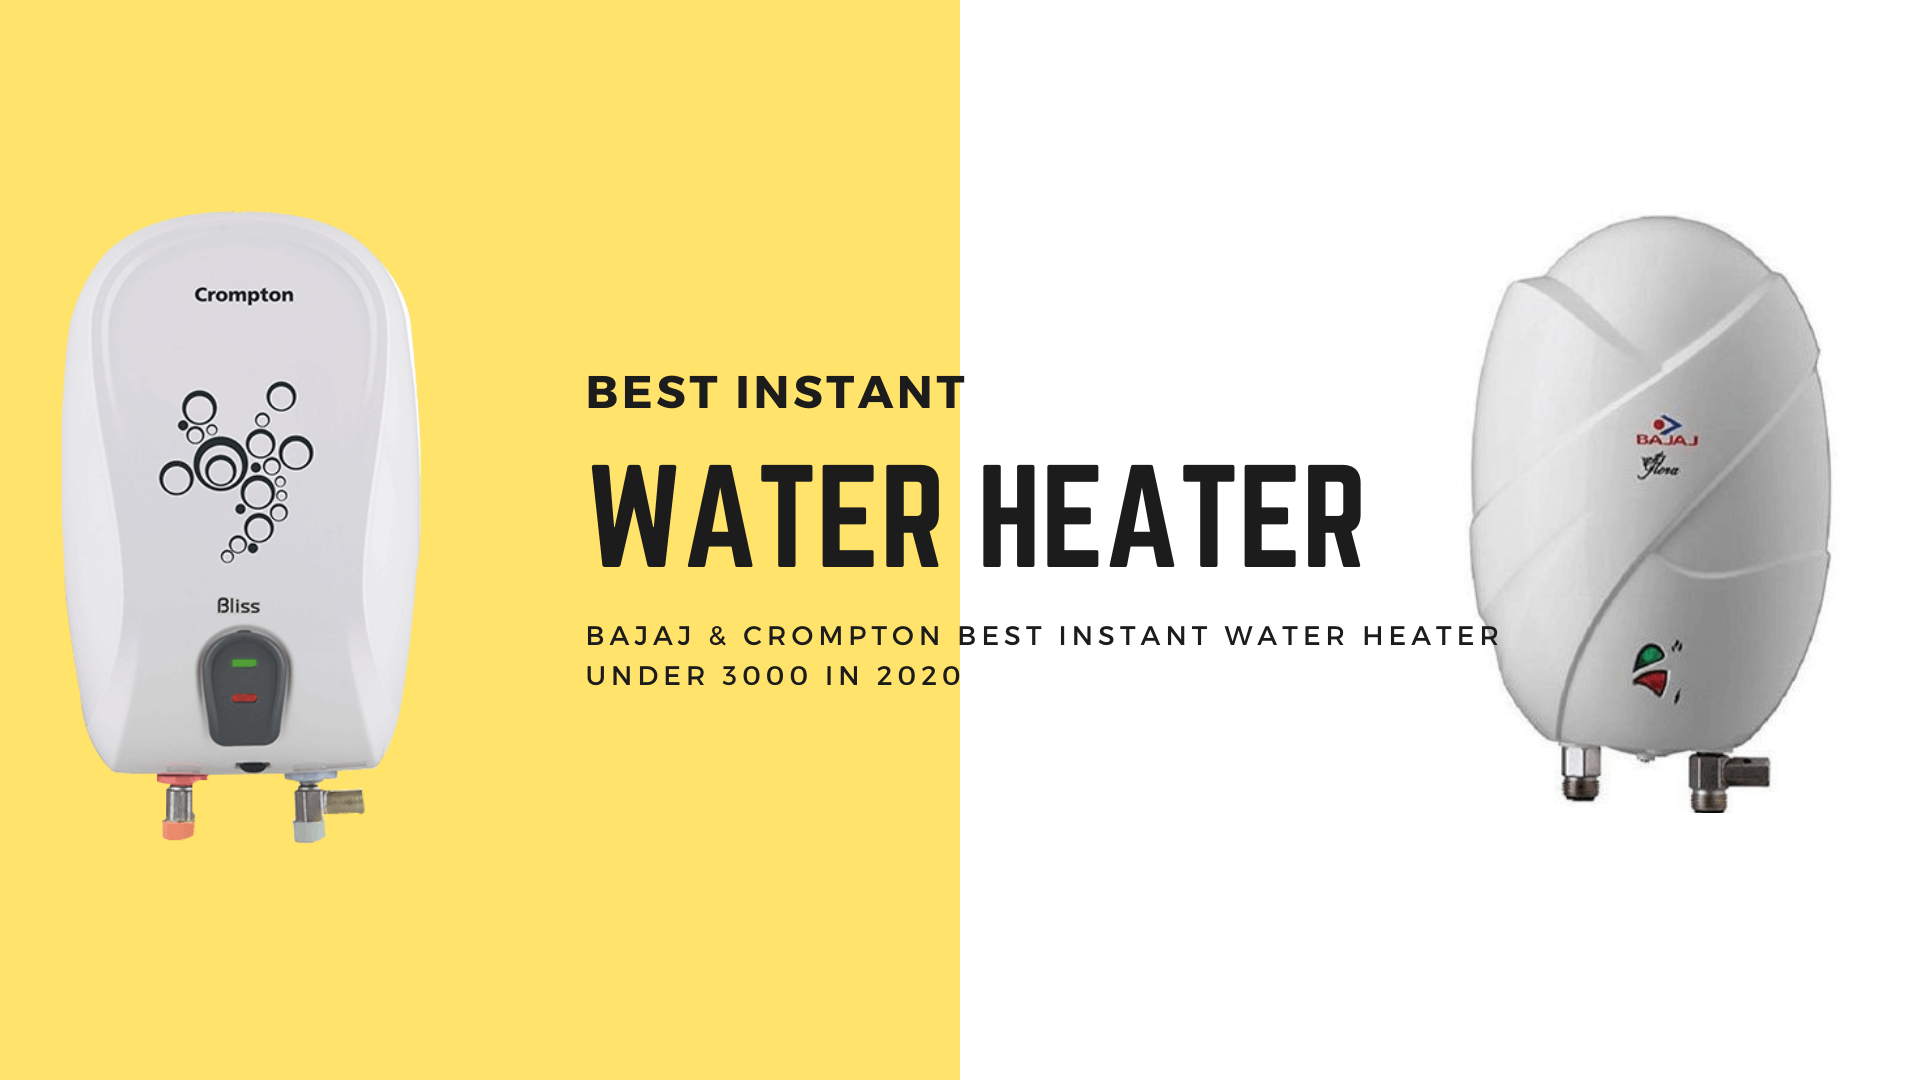 Bajaj & Crompton Best Instant Water Heater Under 3000 in 2020